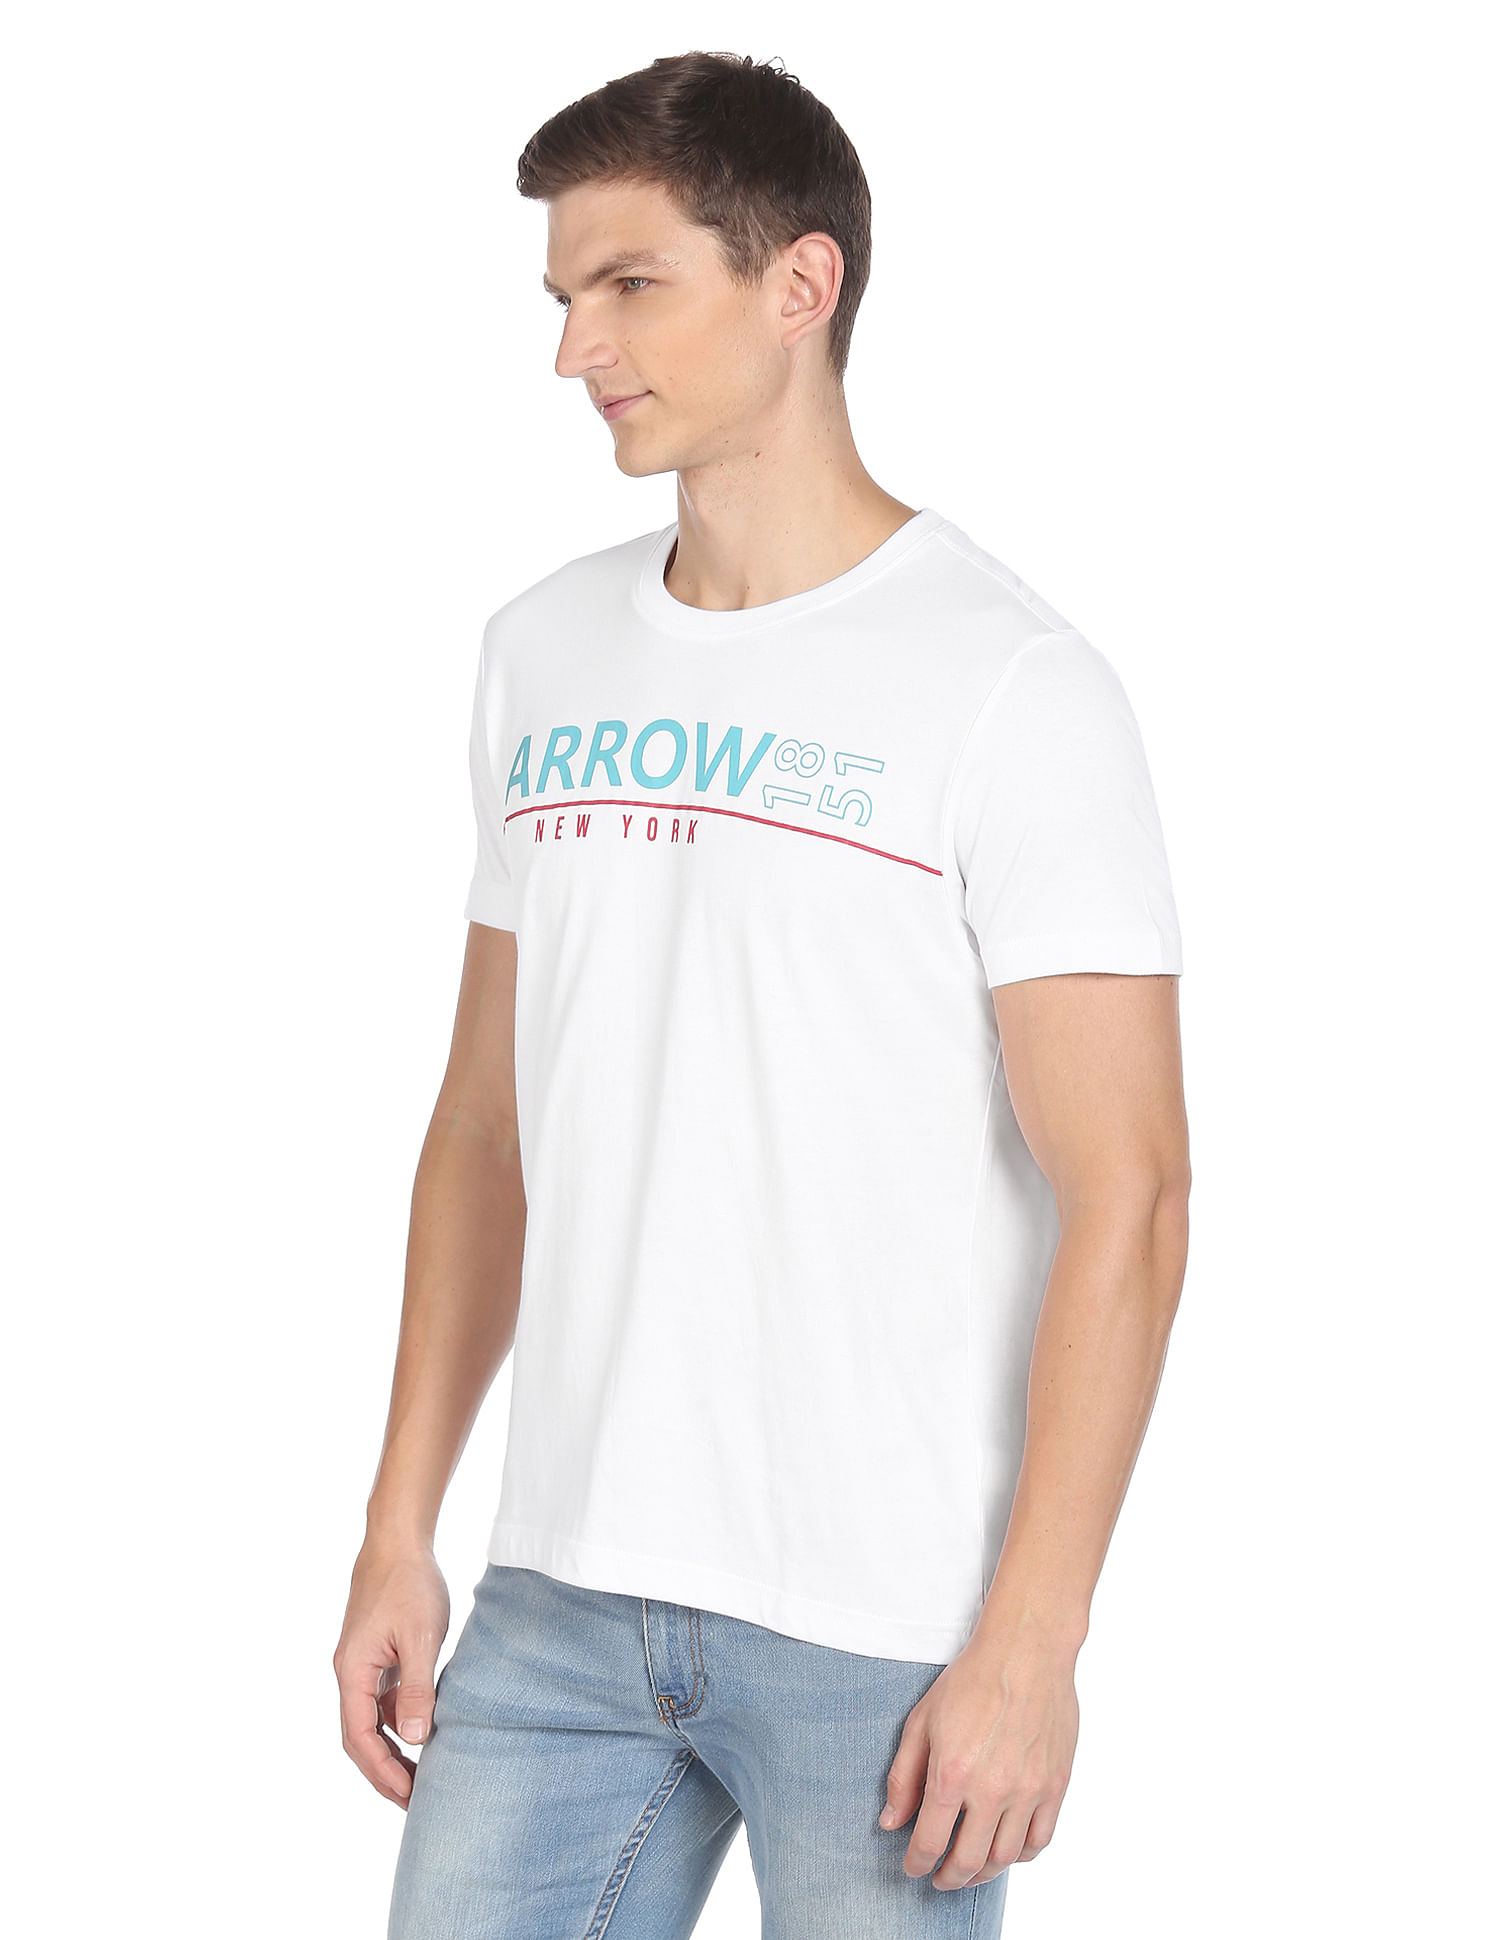 T-Shirt Buy Print Pure Brand Arrow Men Cotton White Sports